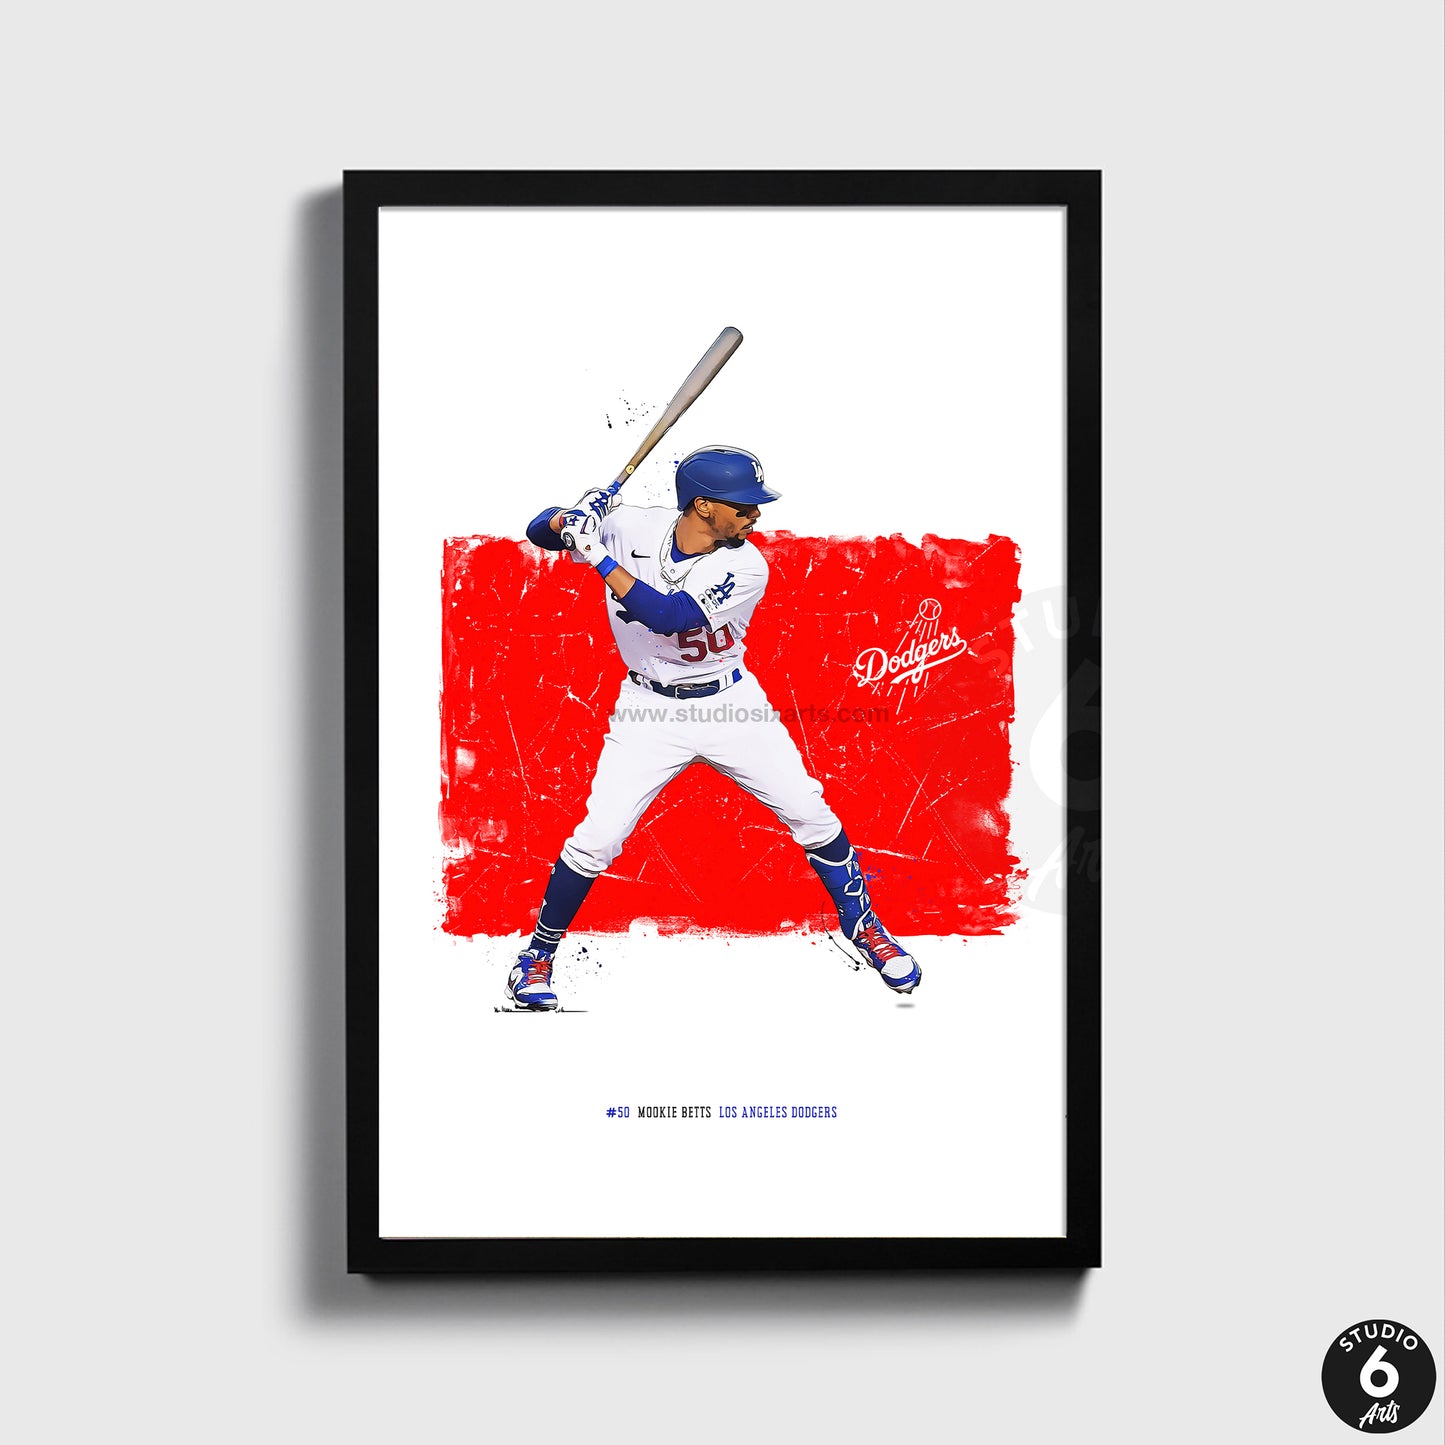 Mookie Betts Poster and Canvas, Los Angeles Baseball Print, MLB Wall Decor